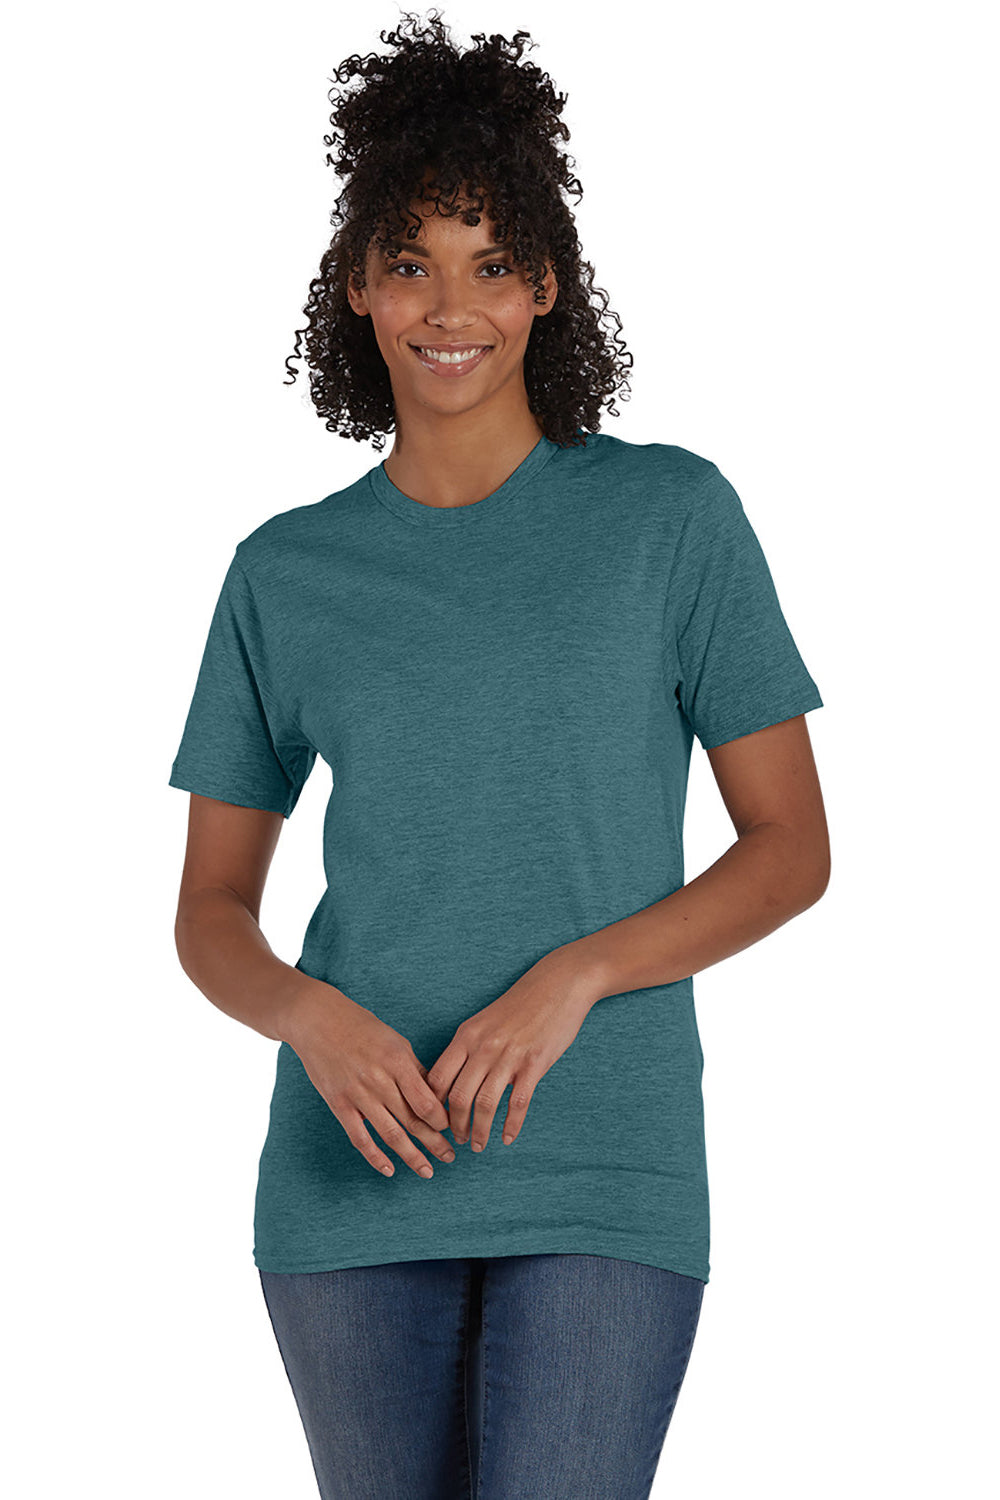 Hanes 4980 Mens Nano-T Short Sleeve Crewneck T-Shirt Heather Cactus Green Front